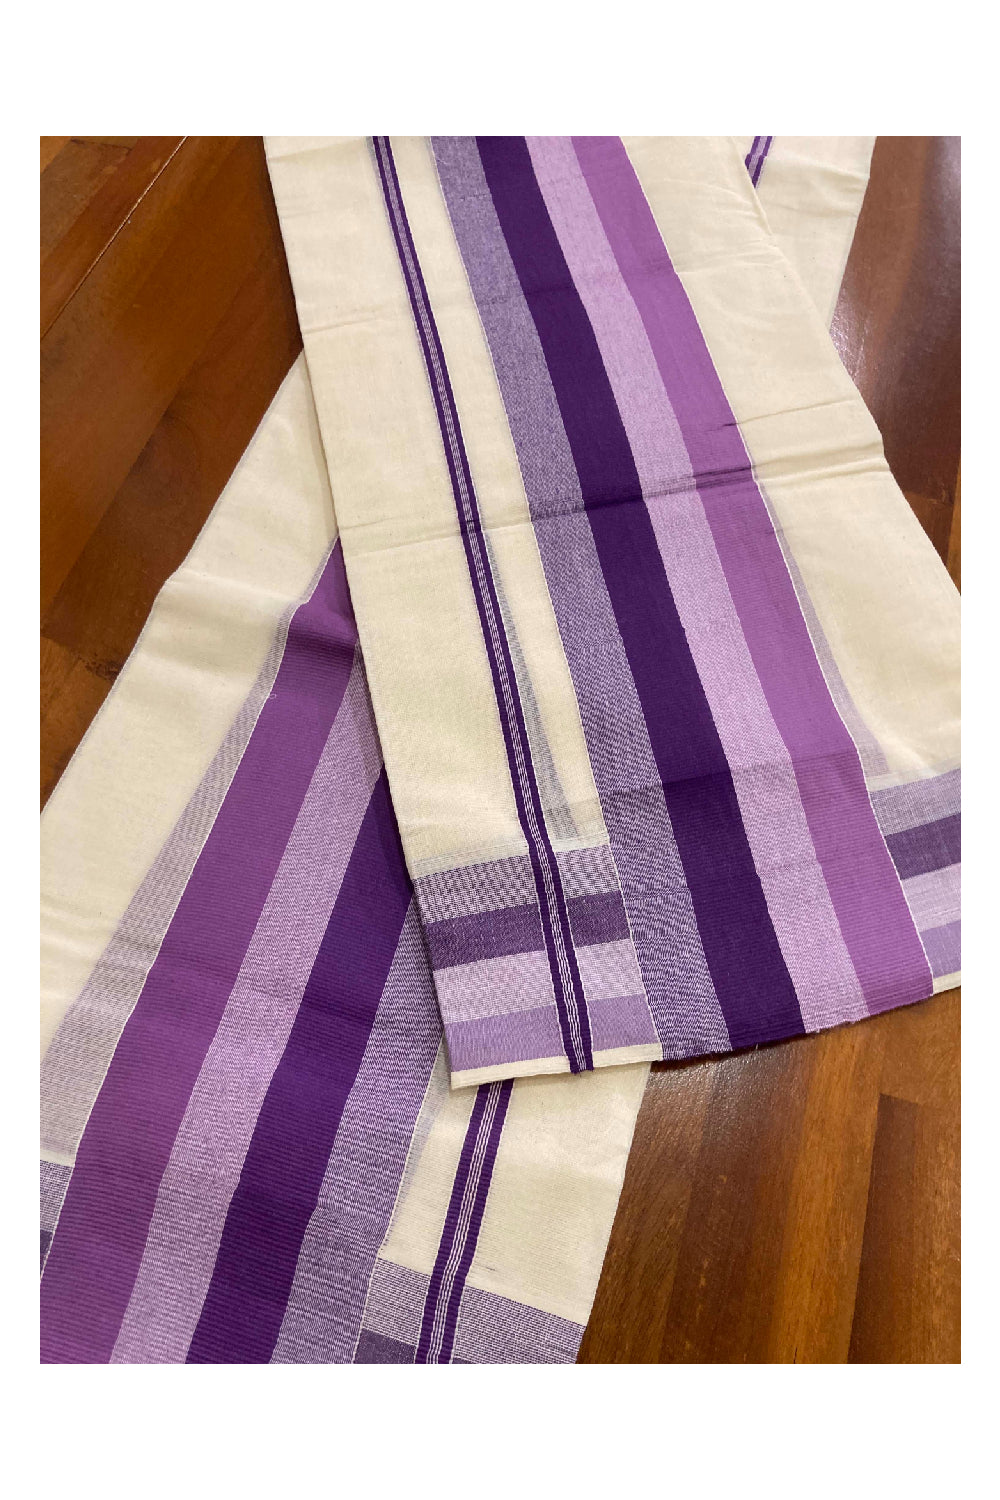 Kerala Cotton Mundum Neriyathum Single (Set Mundu) with Violet and Purple Lines Border 2.80 Mtrs